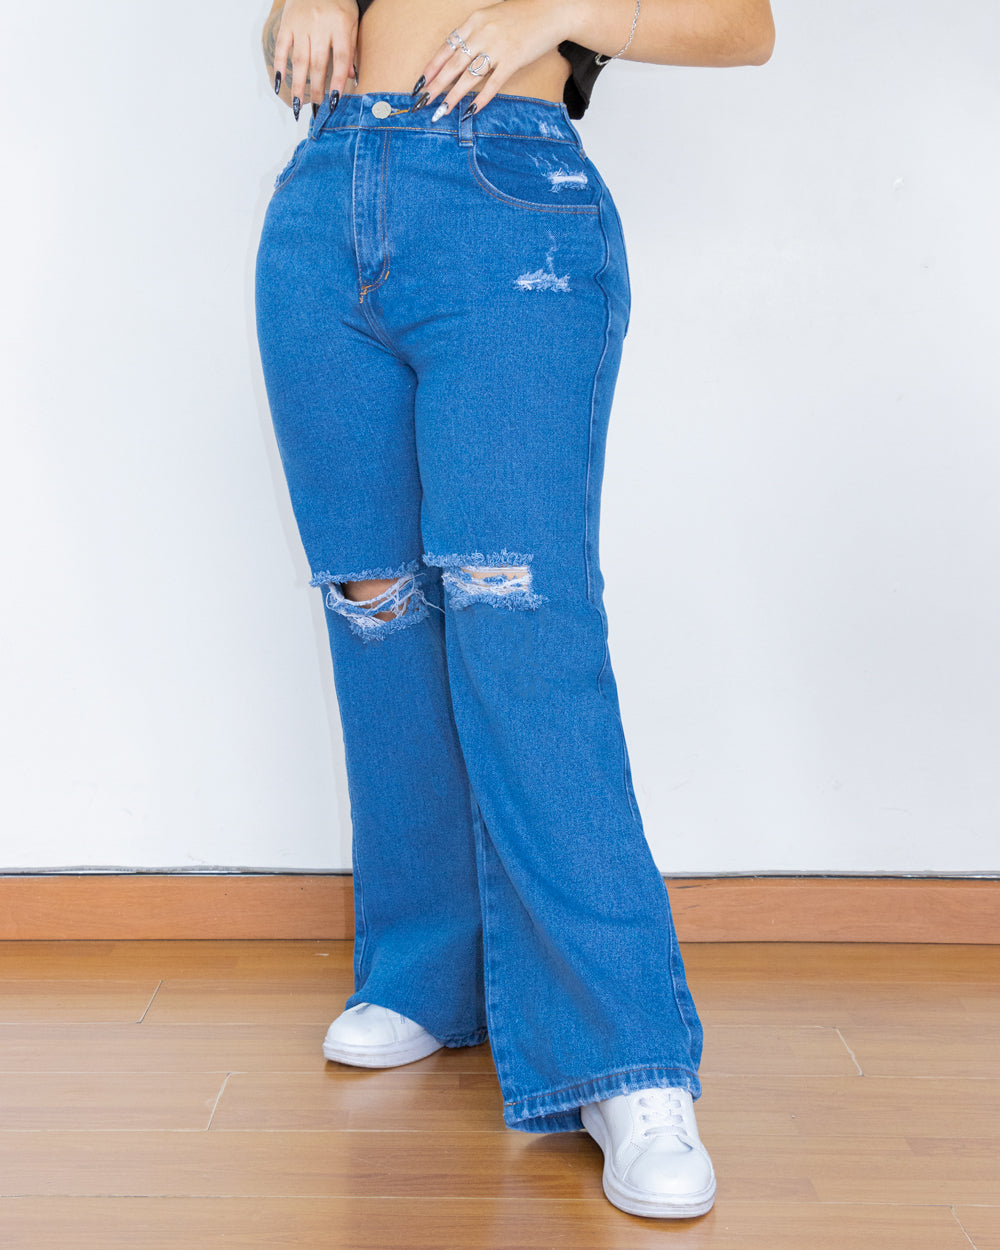 Jean bota recta - Ref:10489 – Embu Jeans Shop